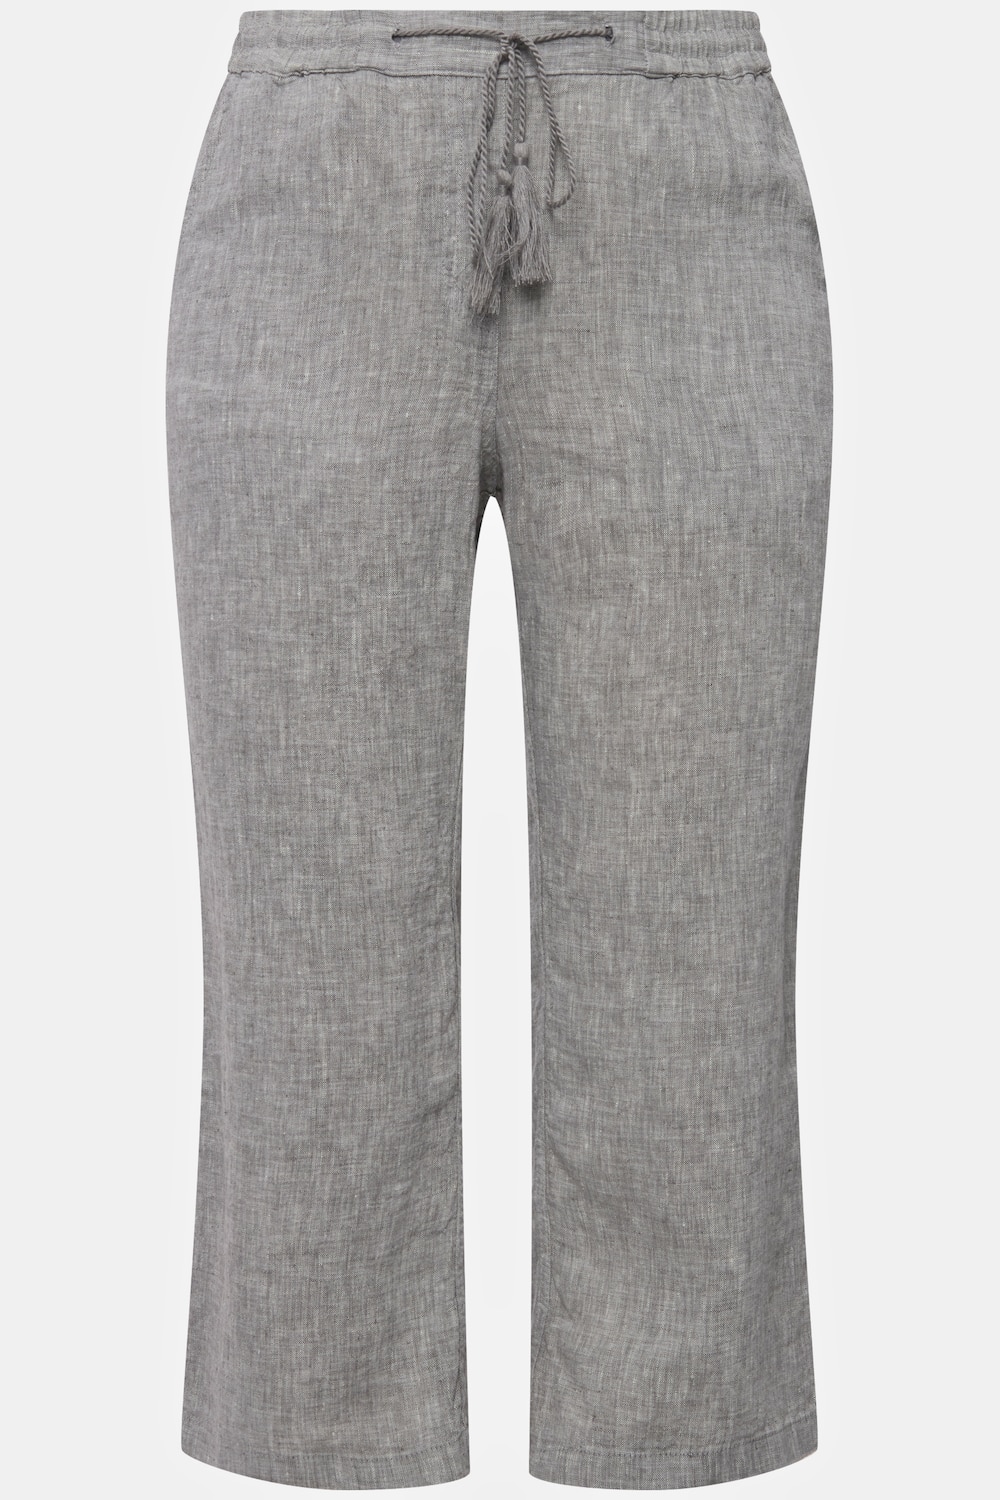 Plus Size Cool Linen Elastic Waist Capri Pants, Woman, grey, size: 16, linen, Ulla Popken